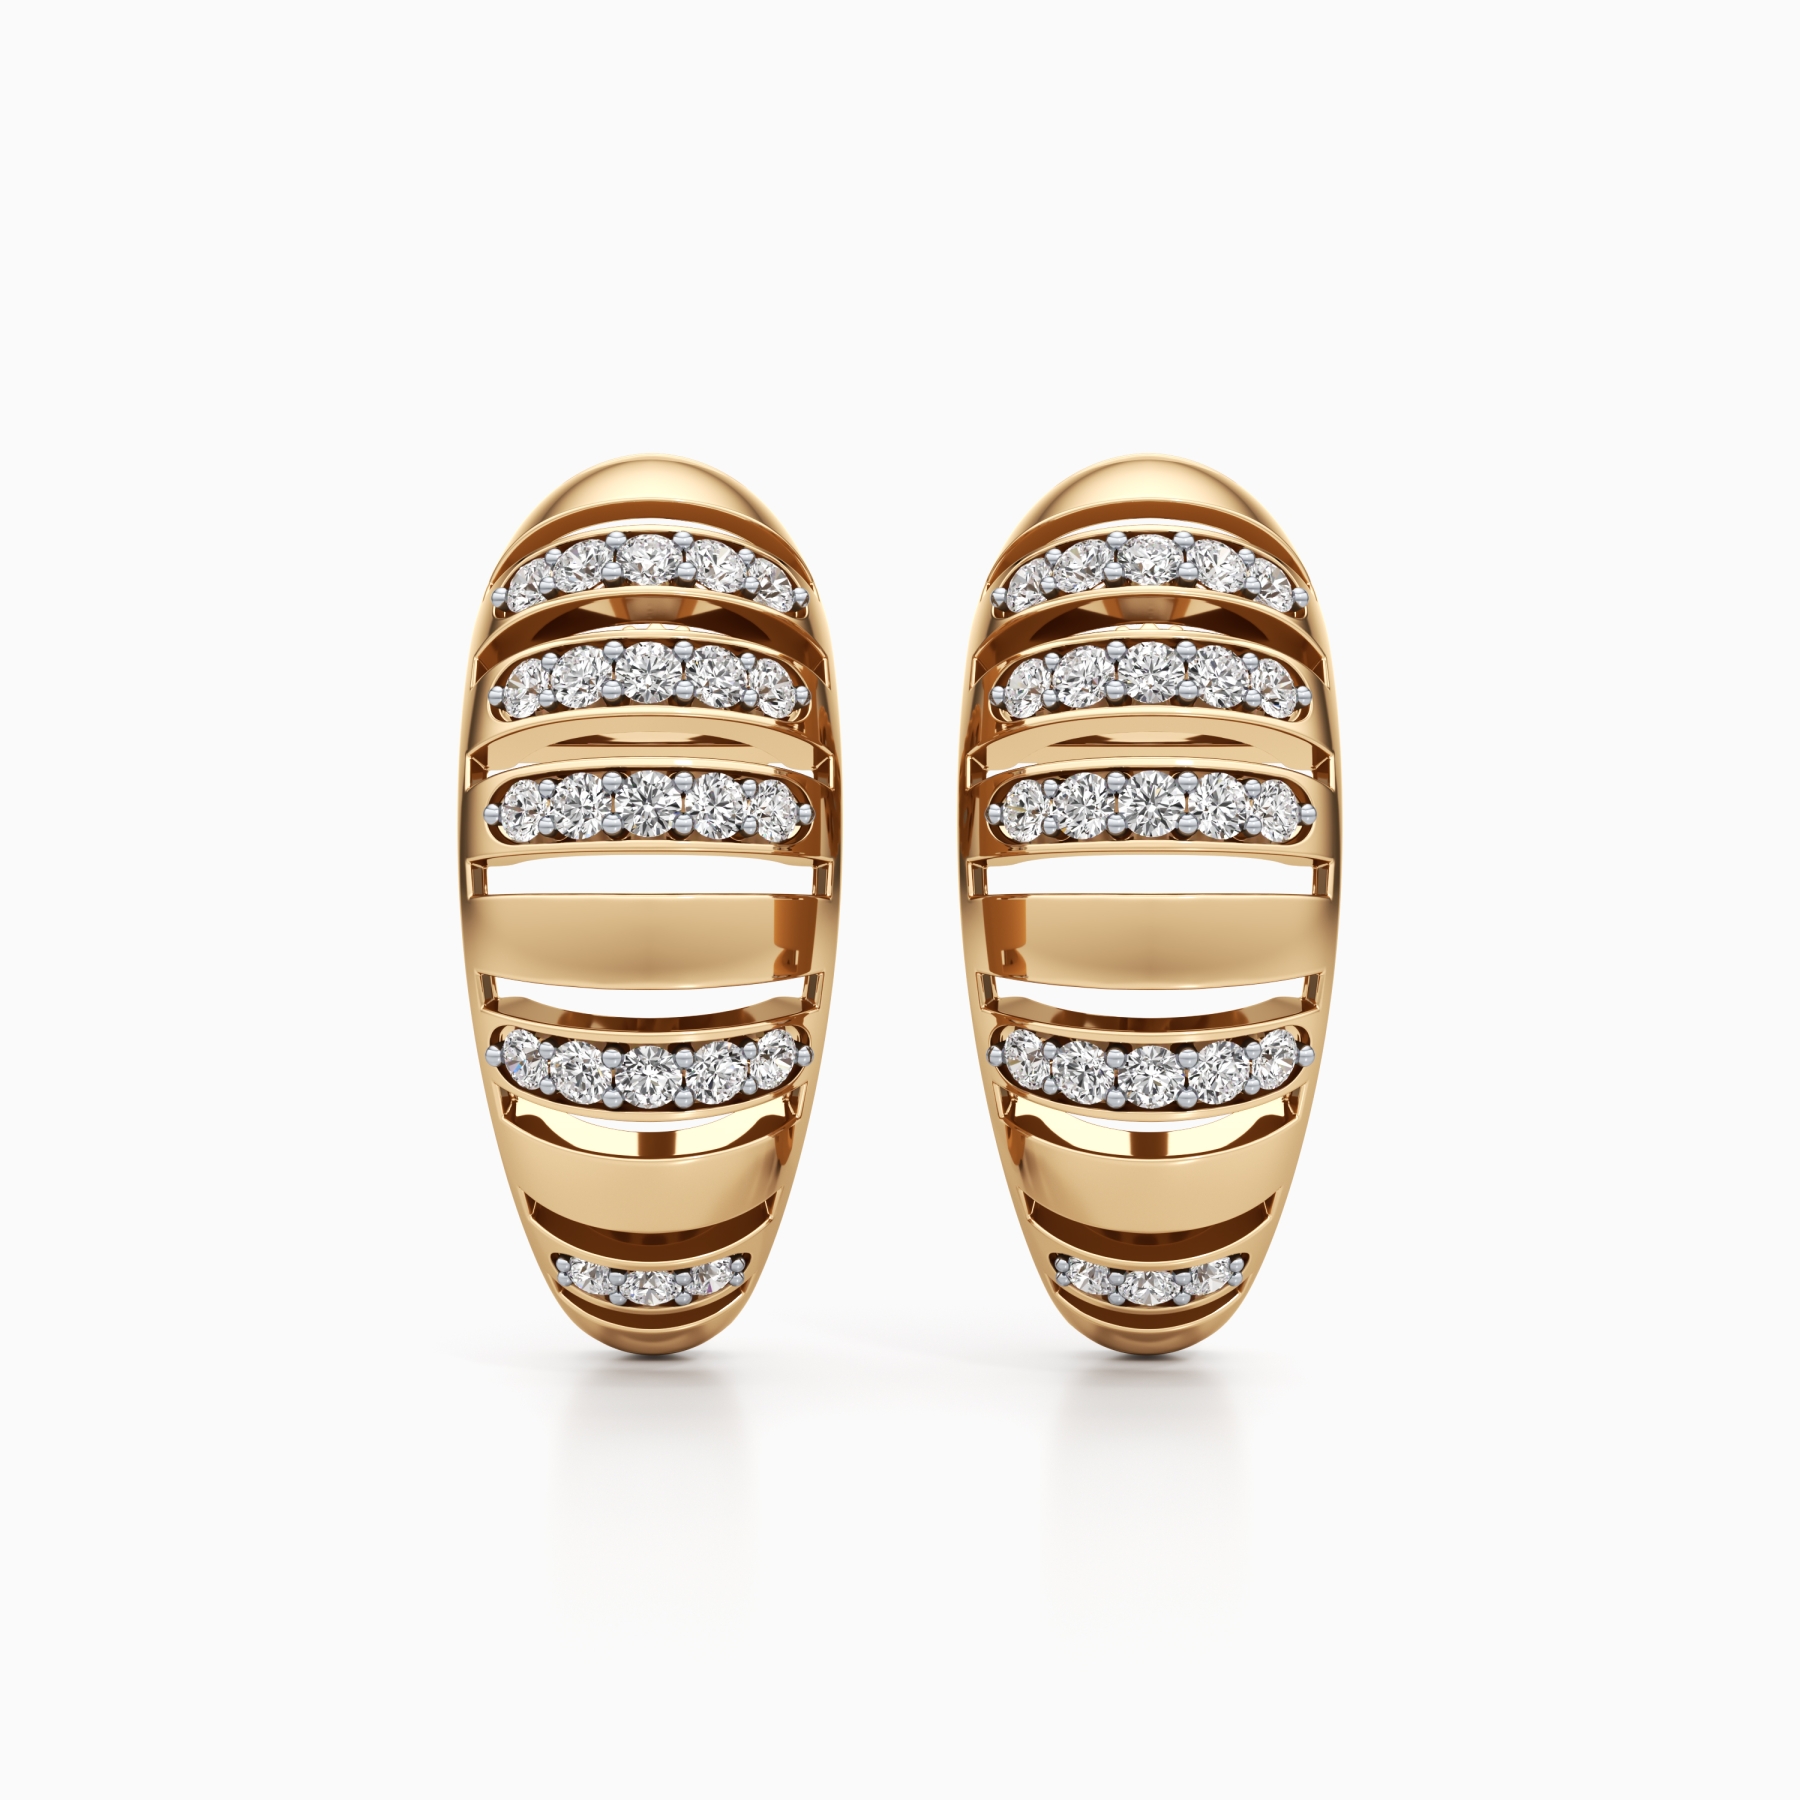 Dome Wing Diamond Earrings in Yellow 14K Gold